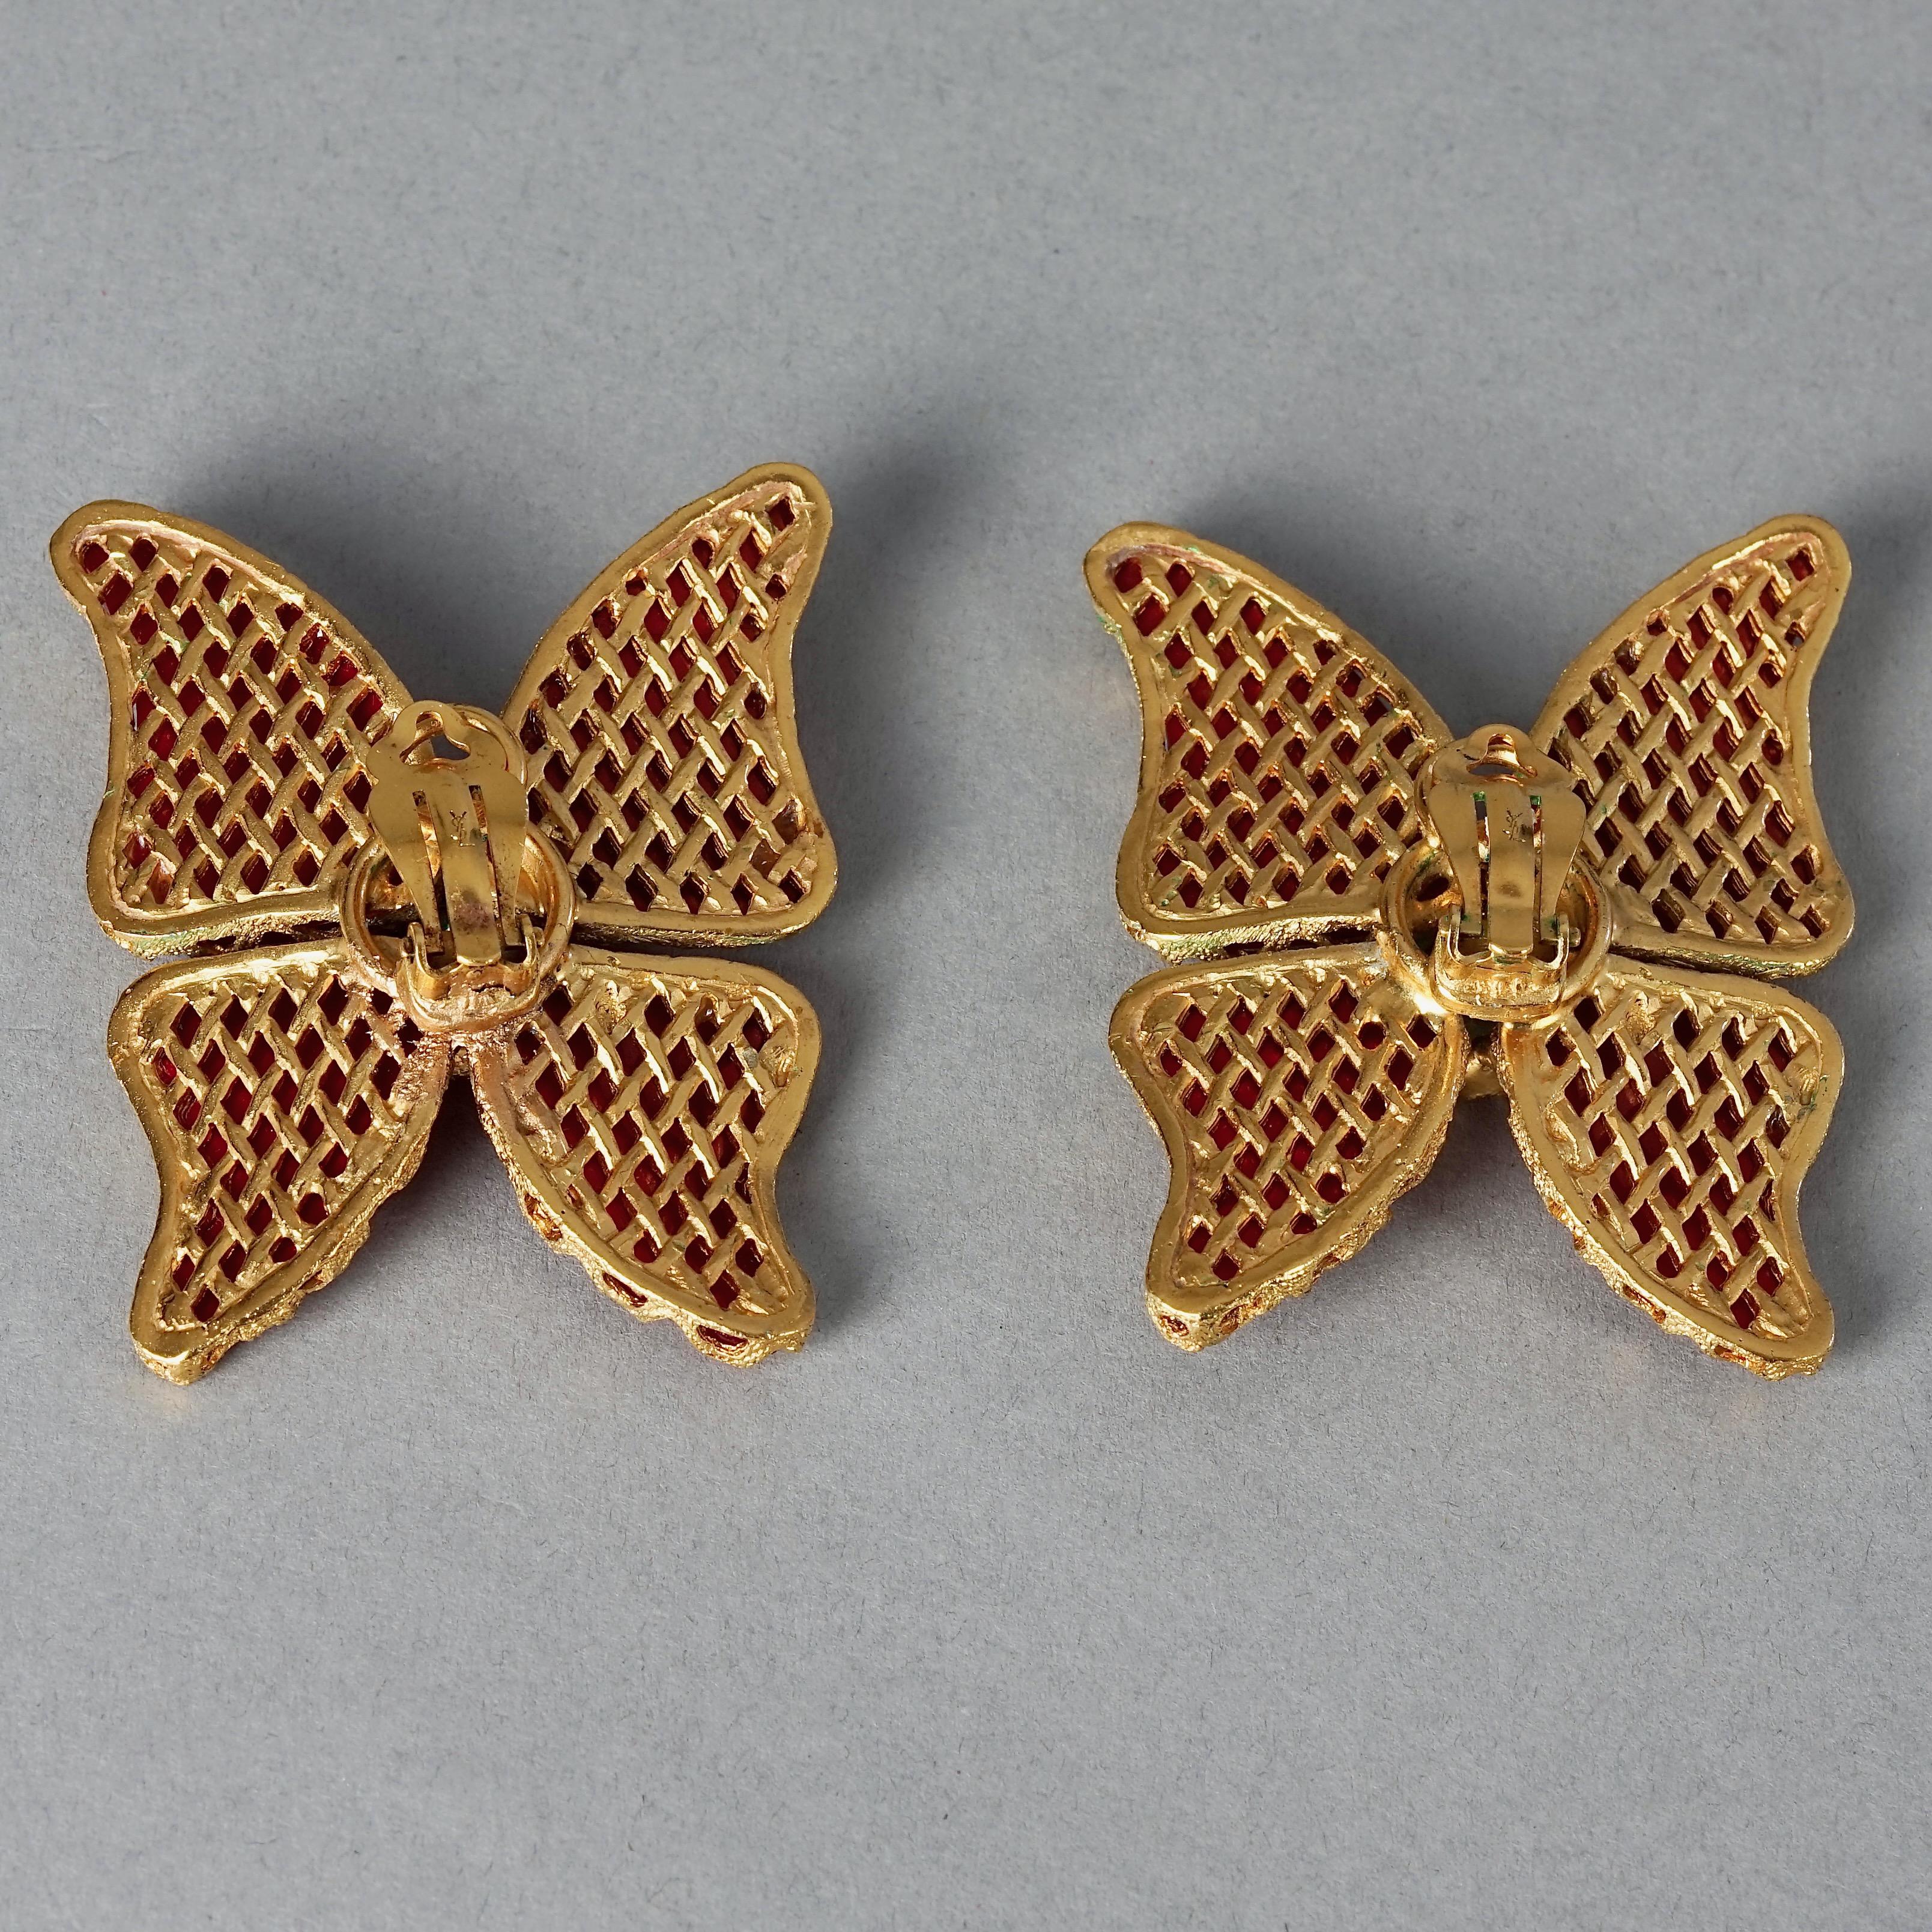 Vintage 1993 YVES SAINT LAURENT Ysl by Robert Goossens Butterfly Earrings For Sale 6